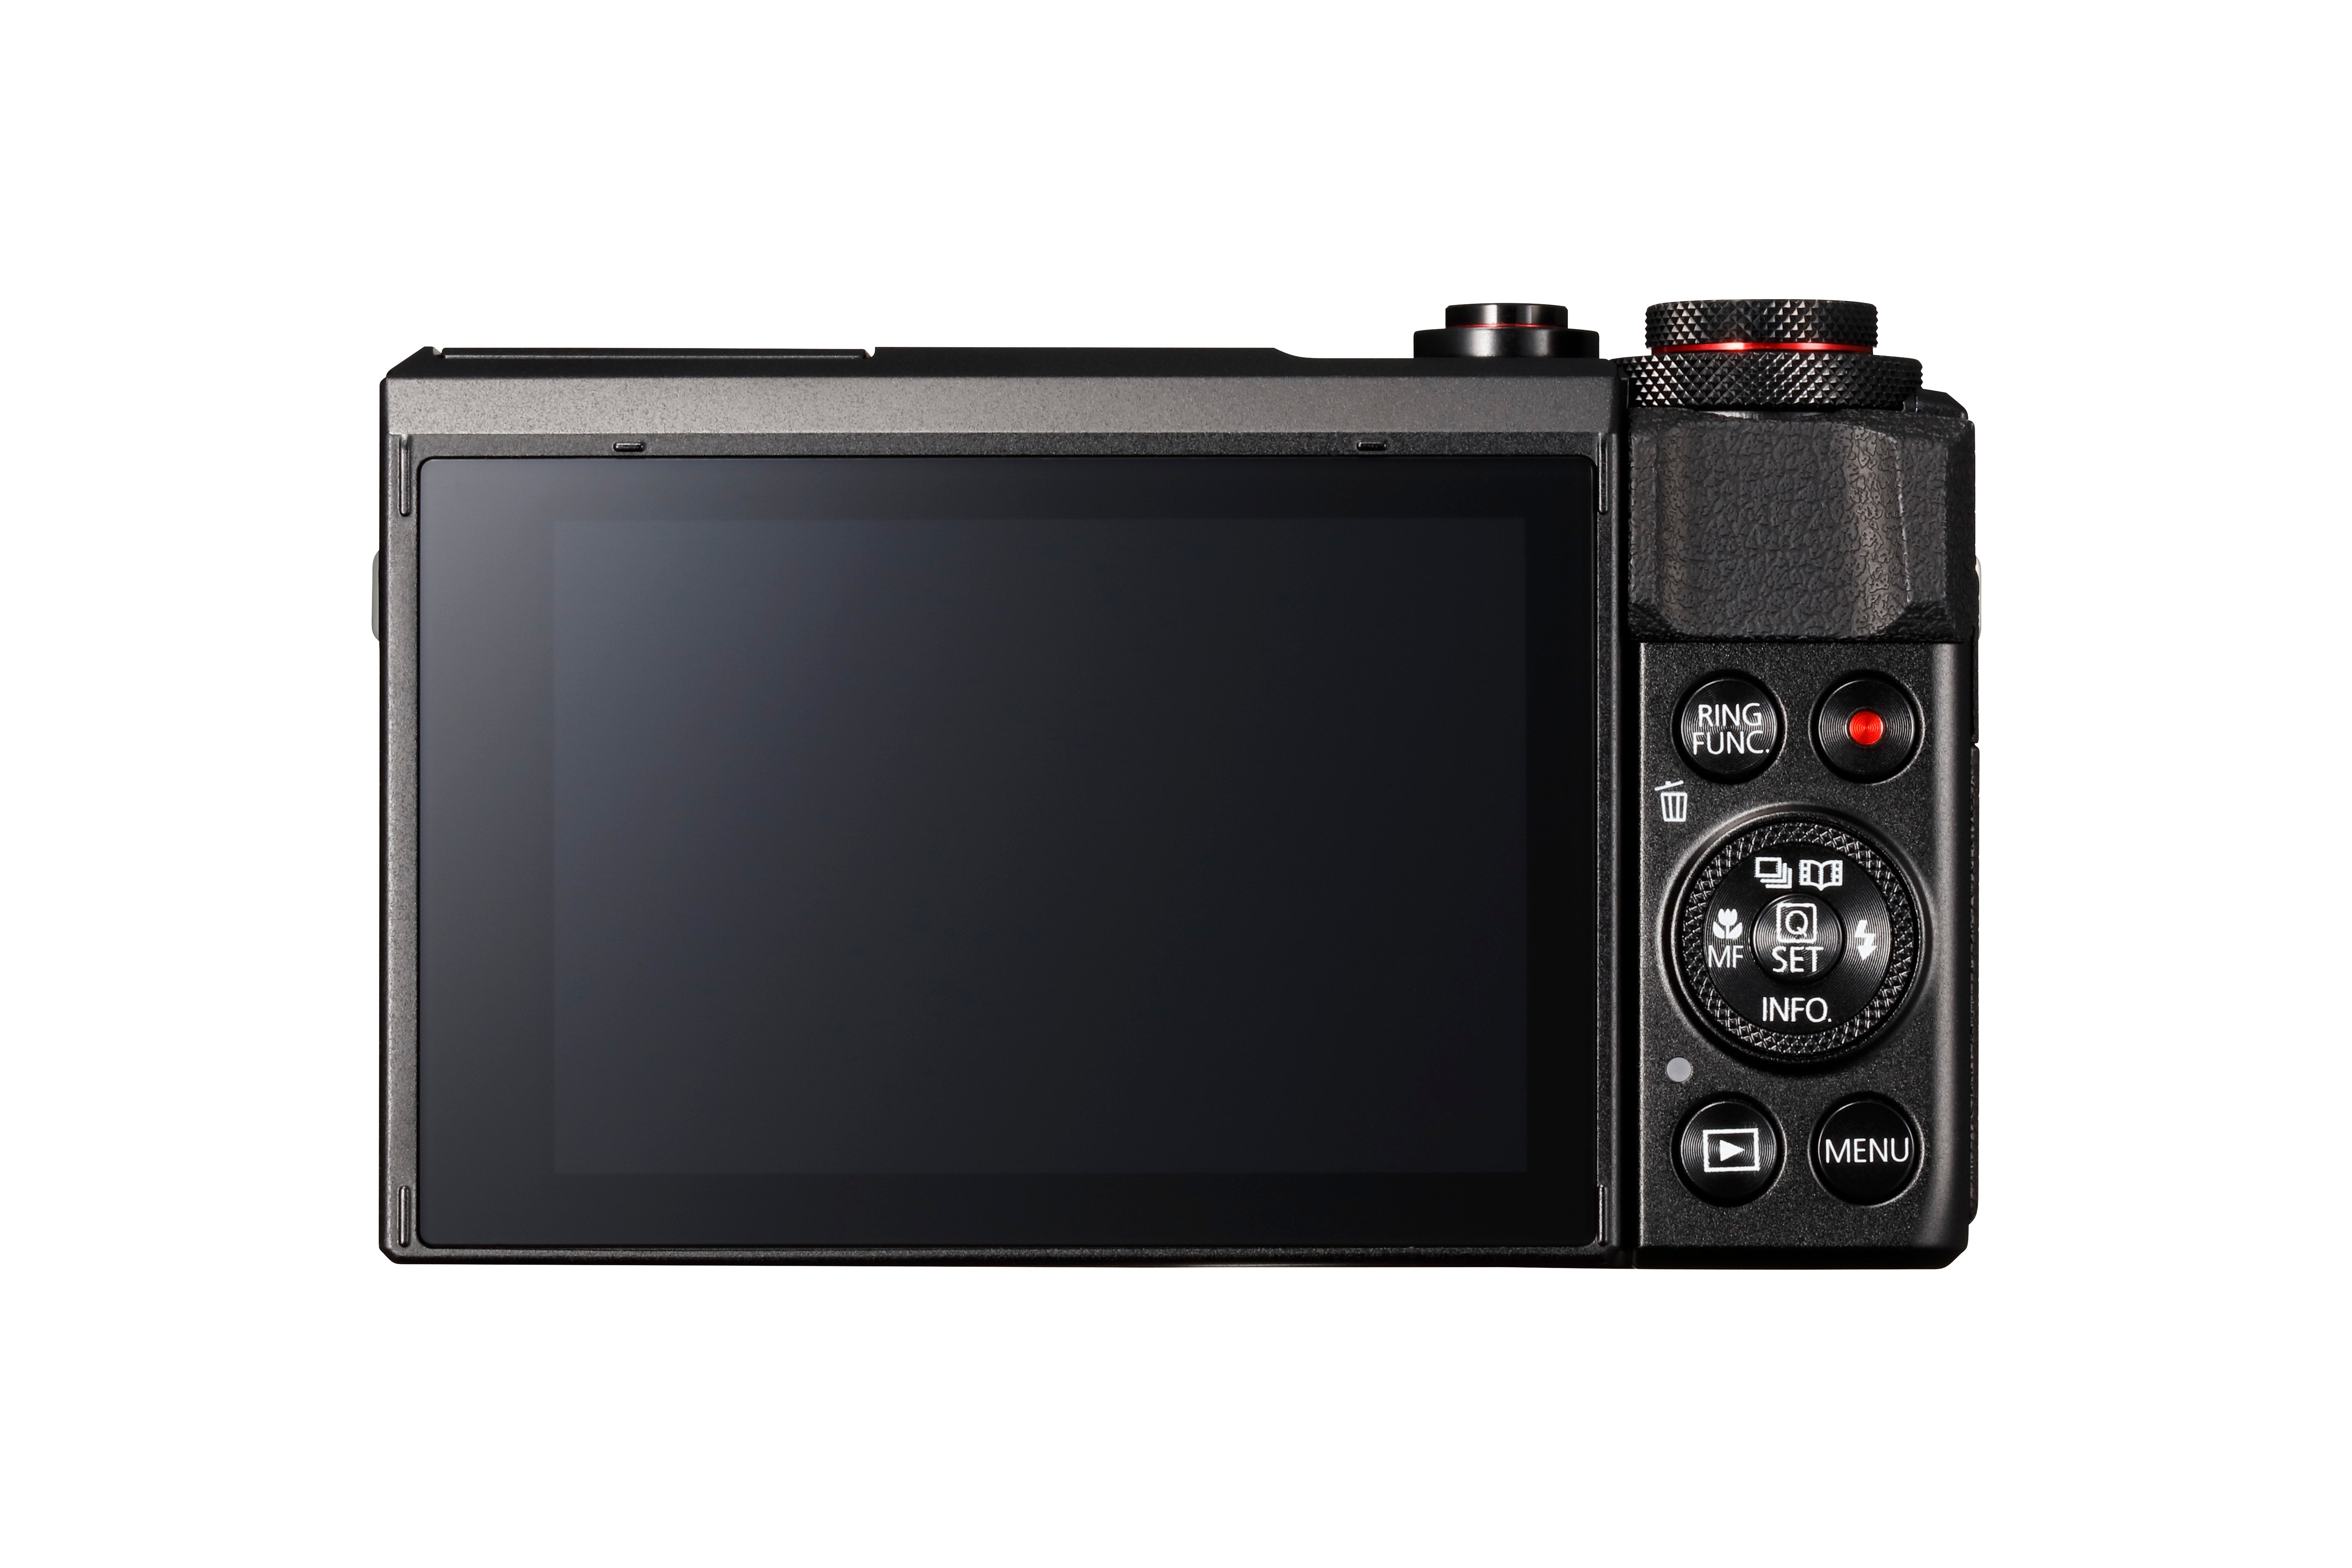 Canon Powershot G7 X Mark II Camera numérique